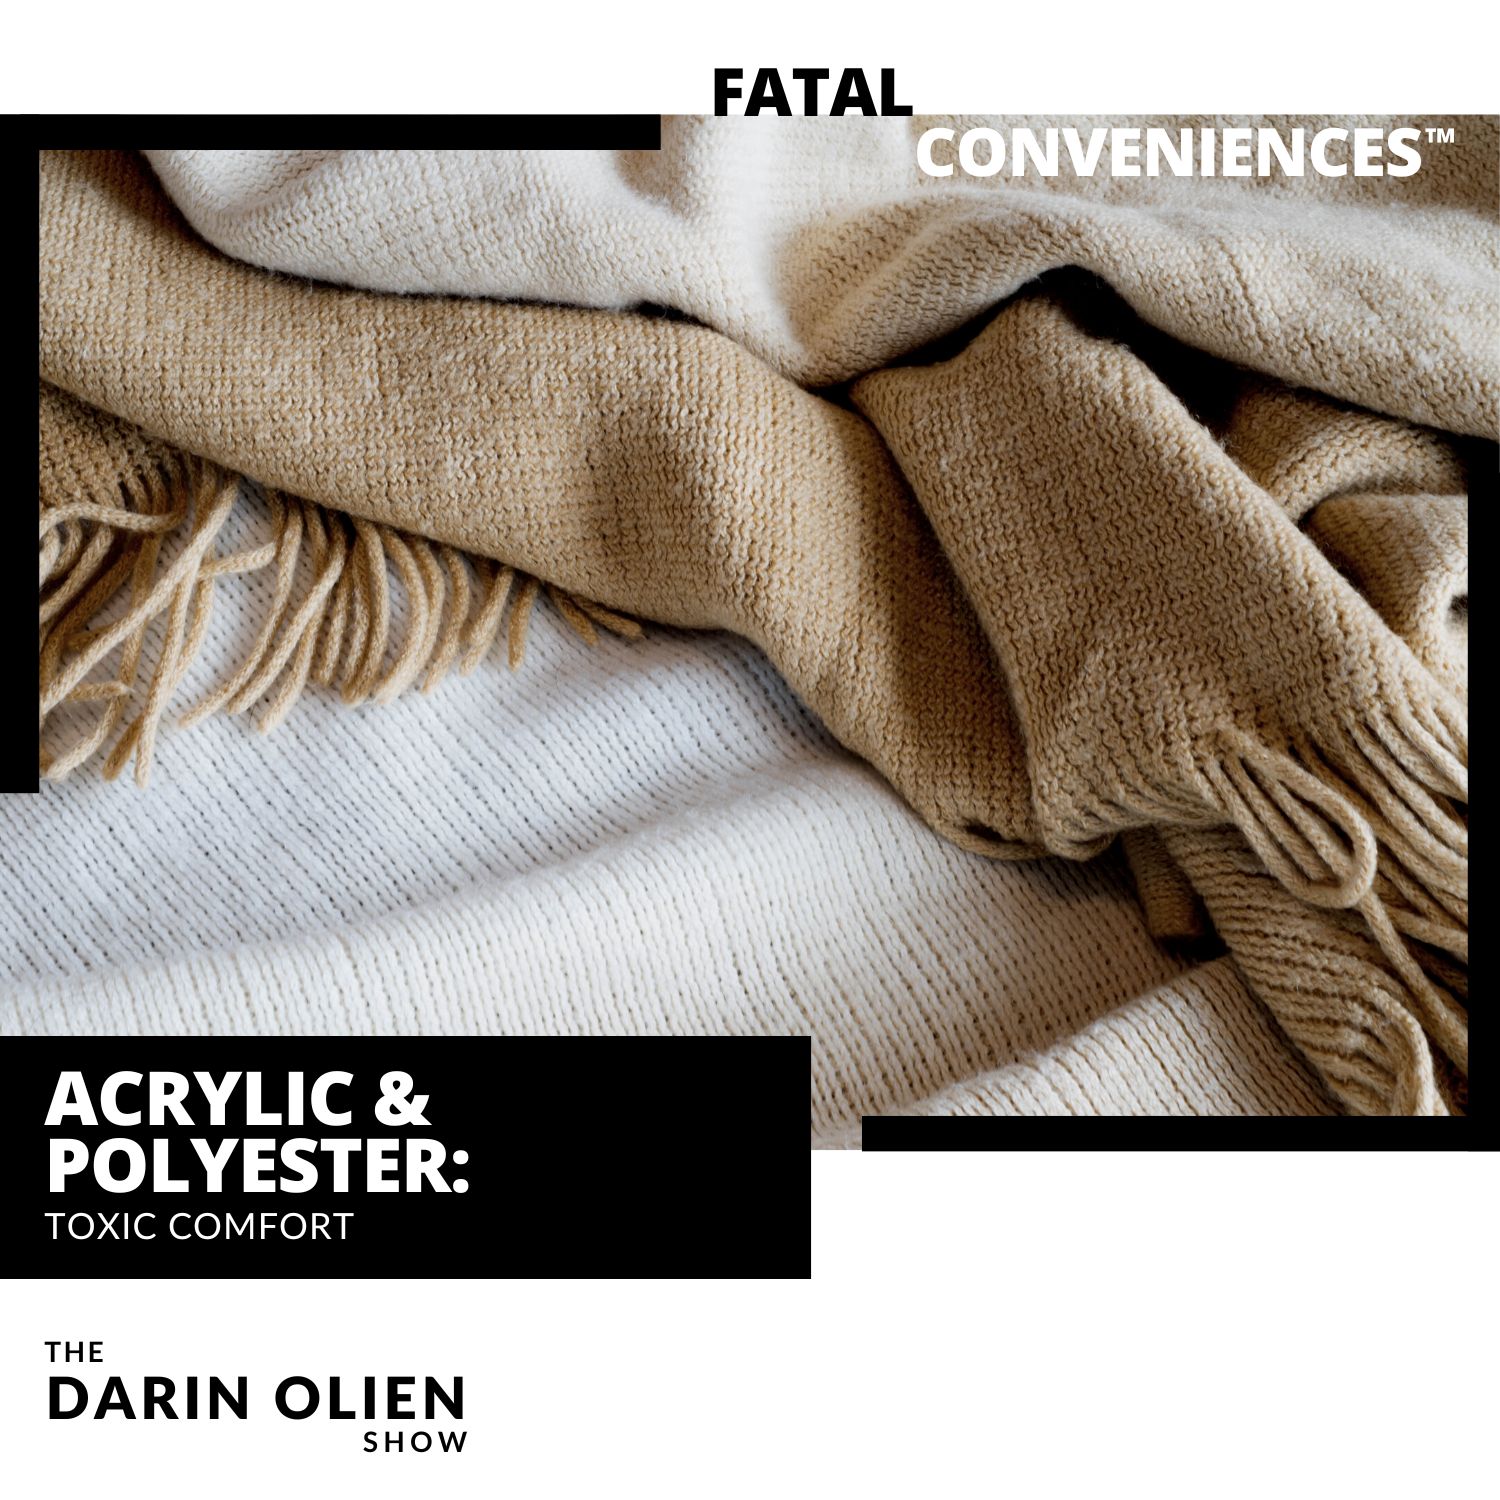 verlamming twist Ontwaken Acrylic & Polyester | Fatal Conveniences™ - Darin Olien